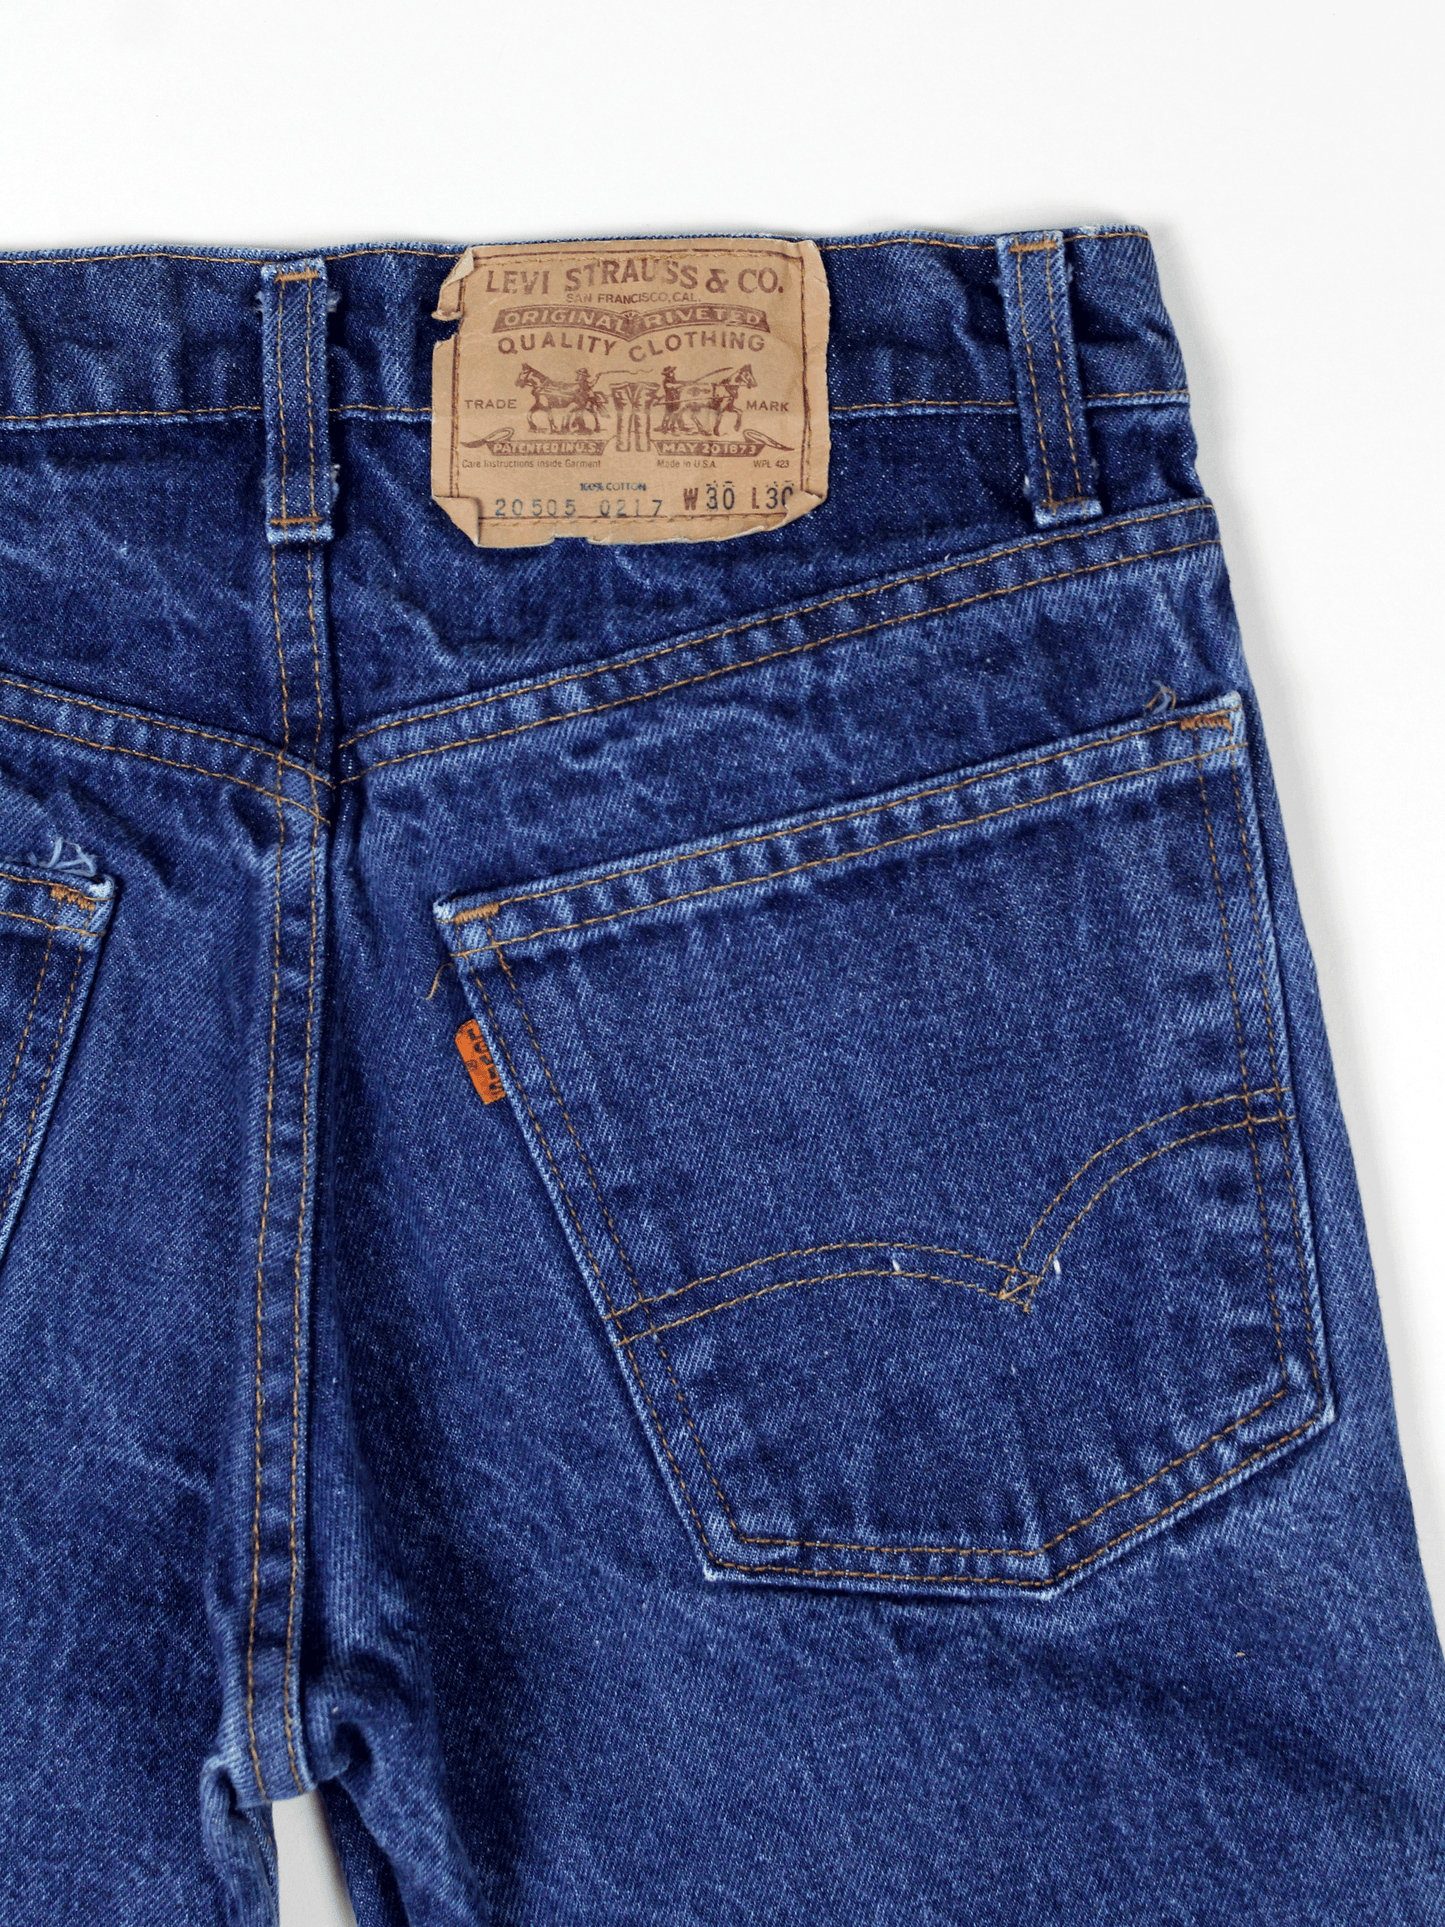 Levi's 505 Vintage Jeans (Orange Label)